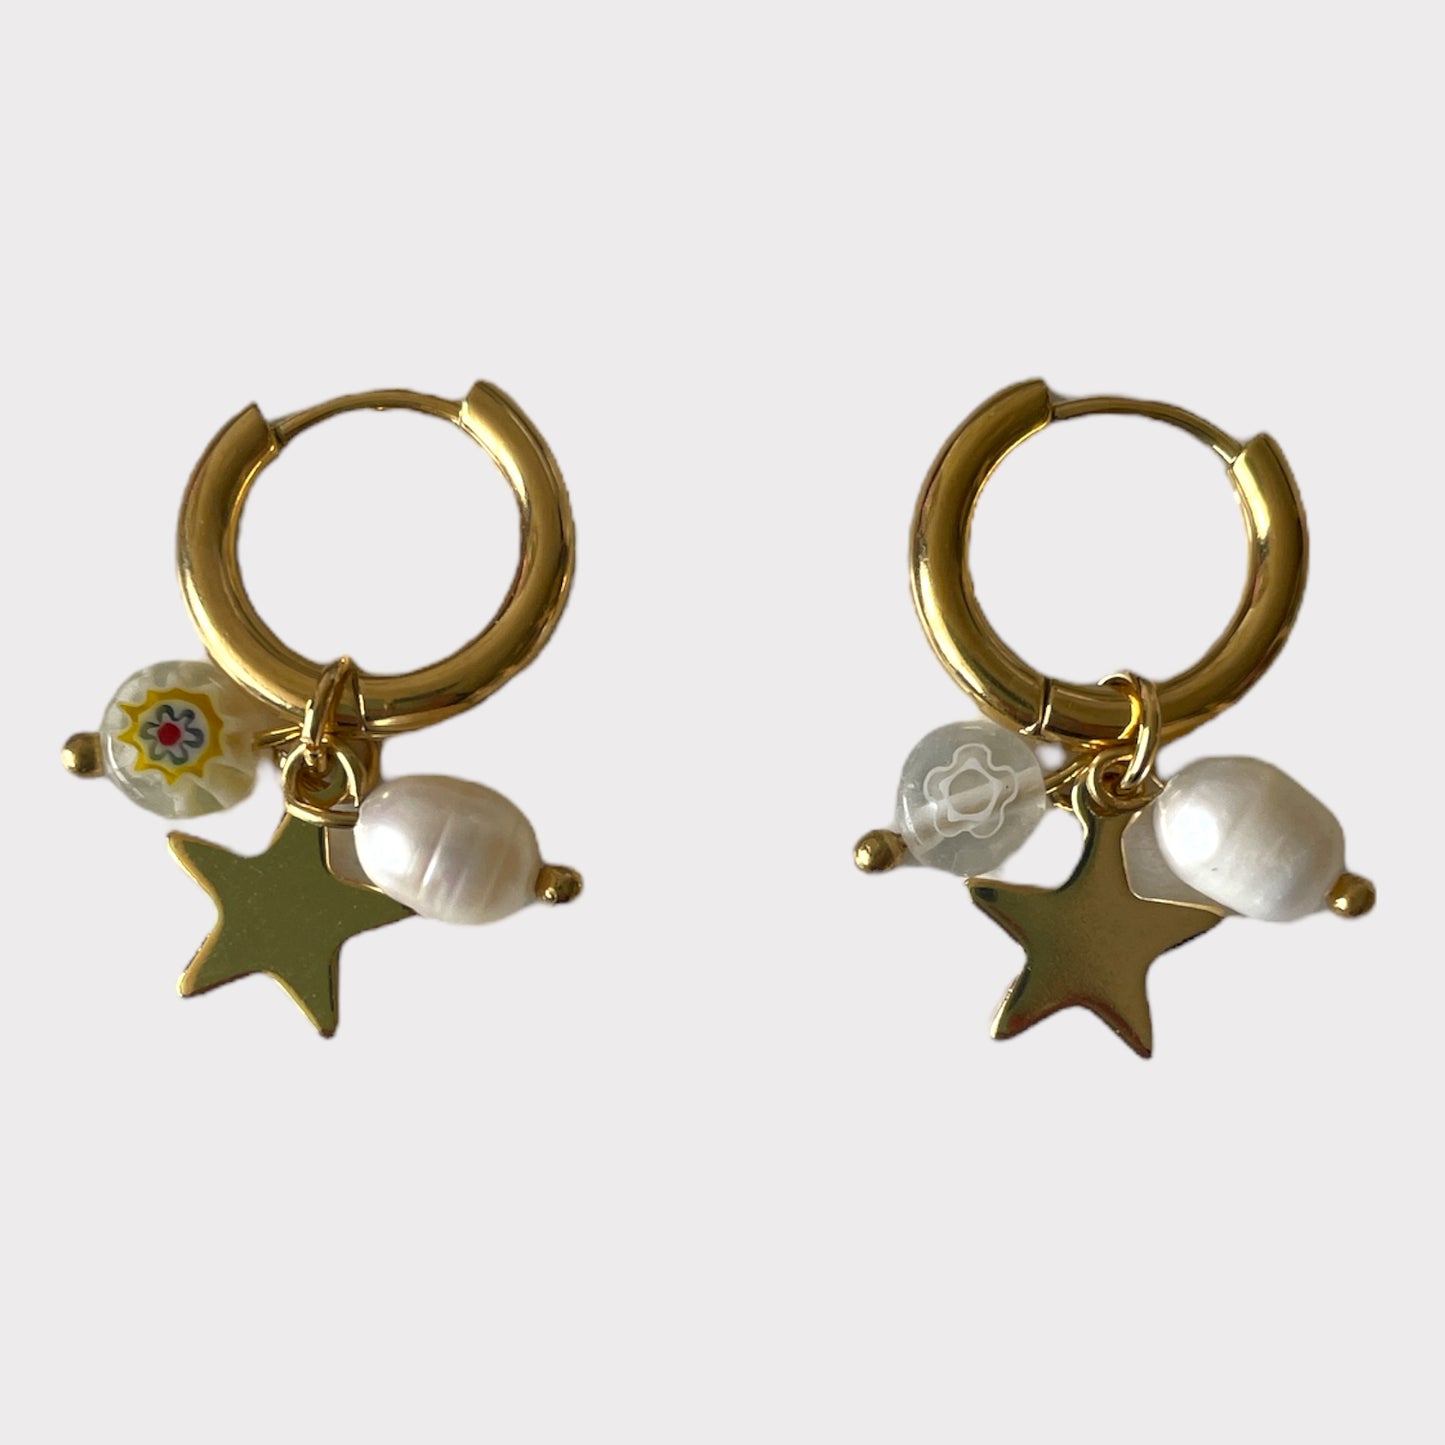 ‘CUTE COMBI’ earrings